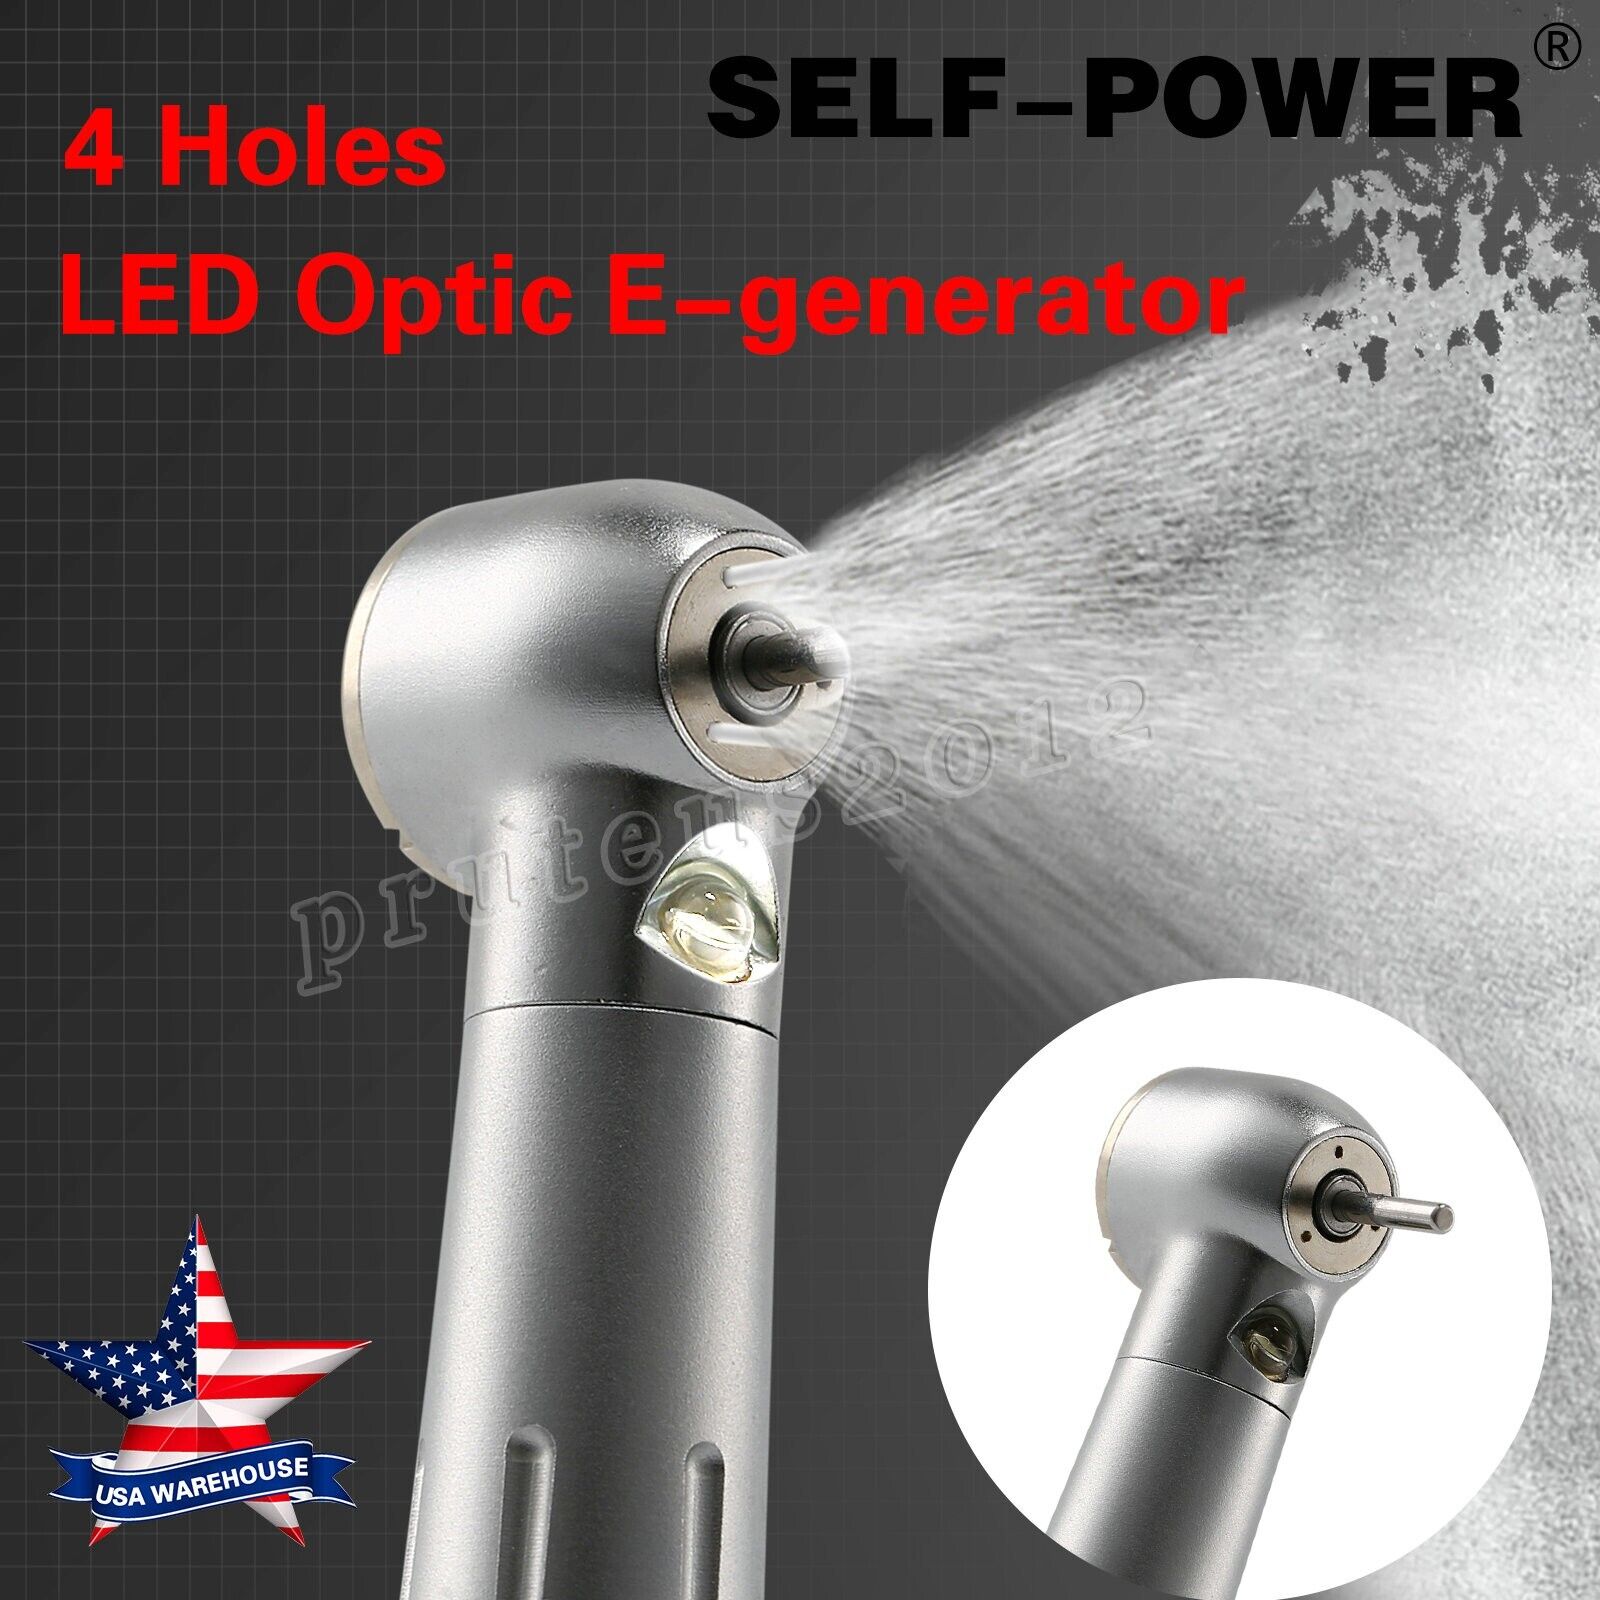 NSK Style Dental Fiber Optic LED E-generator high speed handpiece Turbine 4 HOLE SELF POWER Does Not Apply